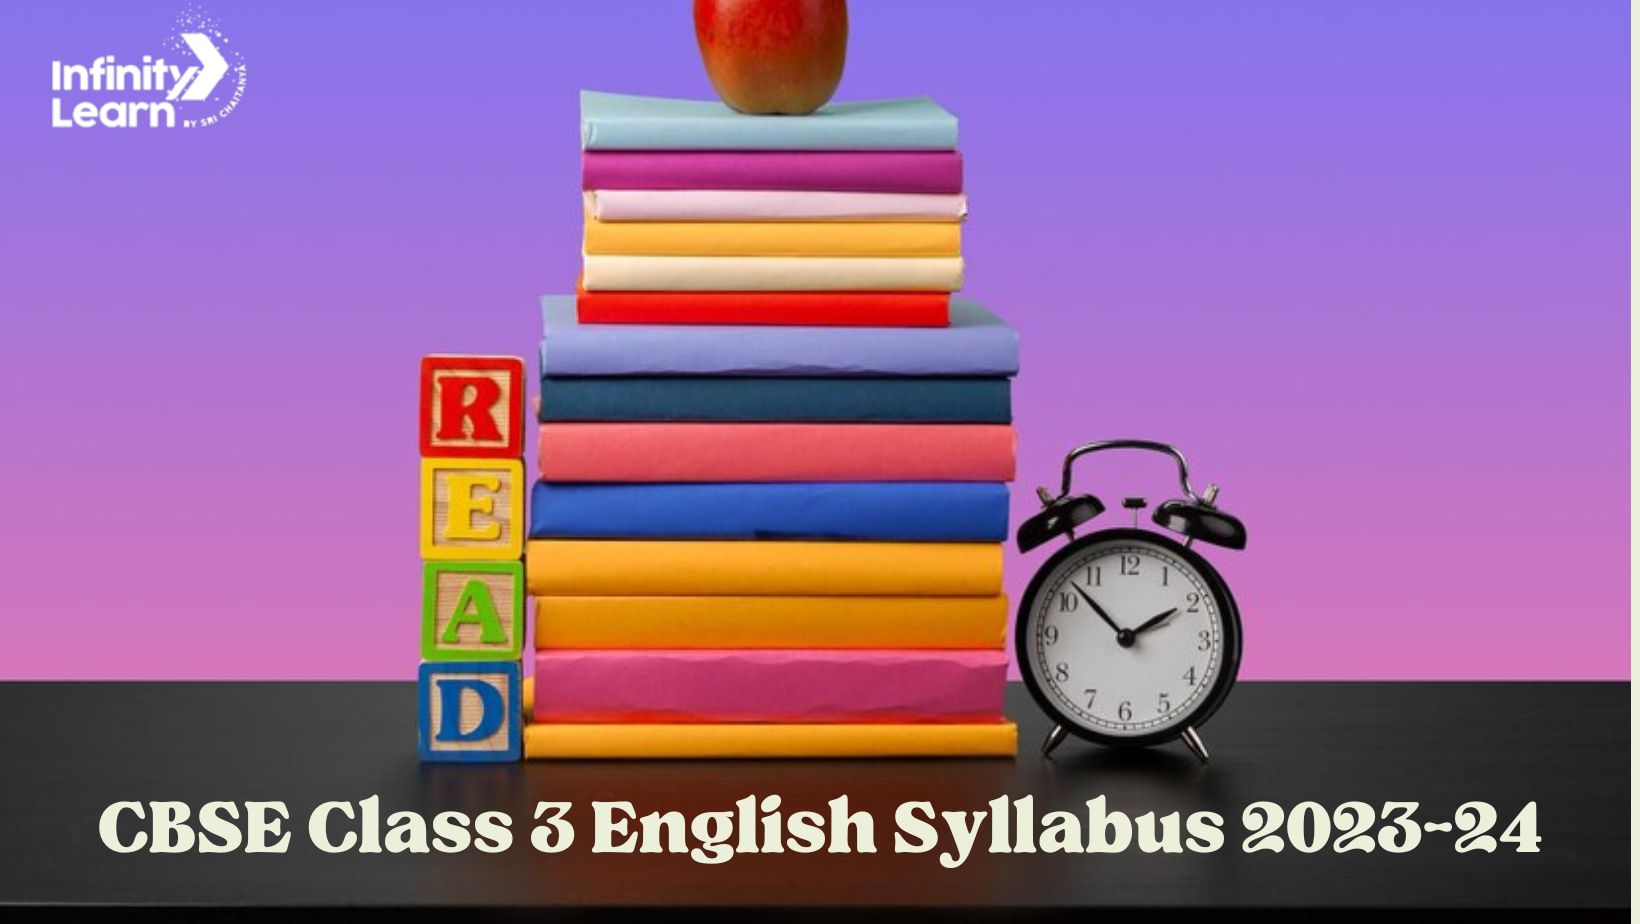 CBSE Class 3 English Syllabus 2023- 24